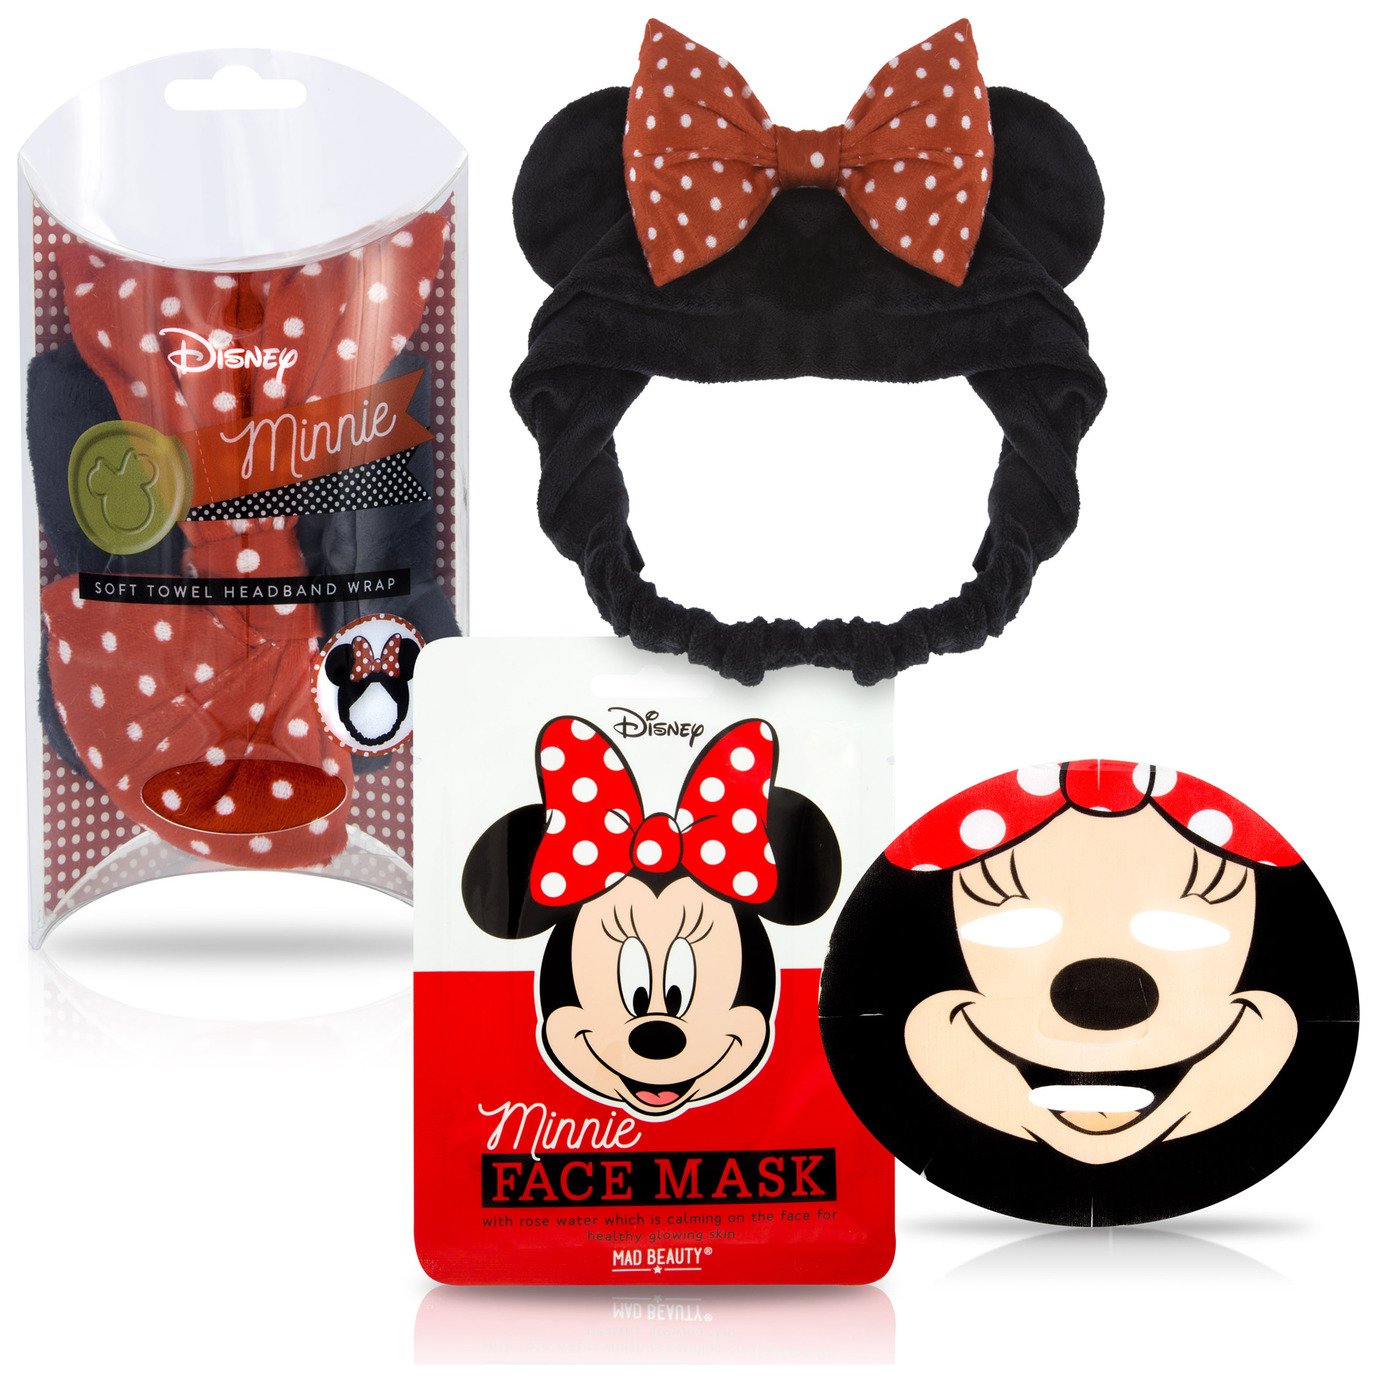 Disney Minnie Face Mask and Headband Gift Set